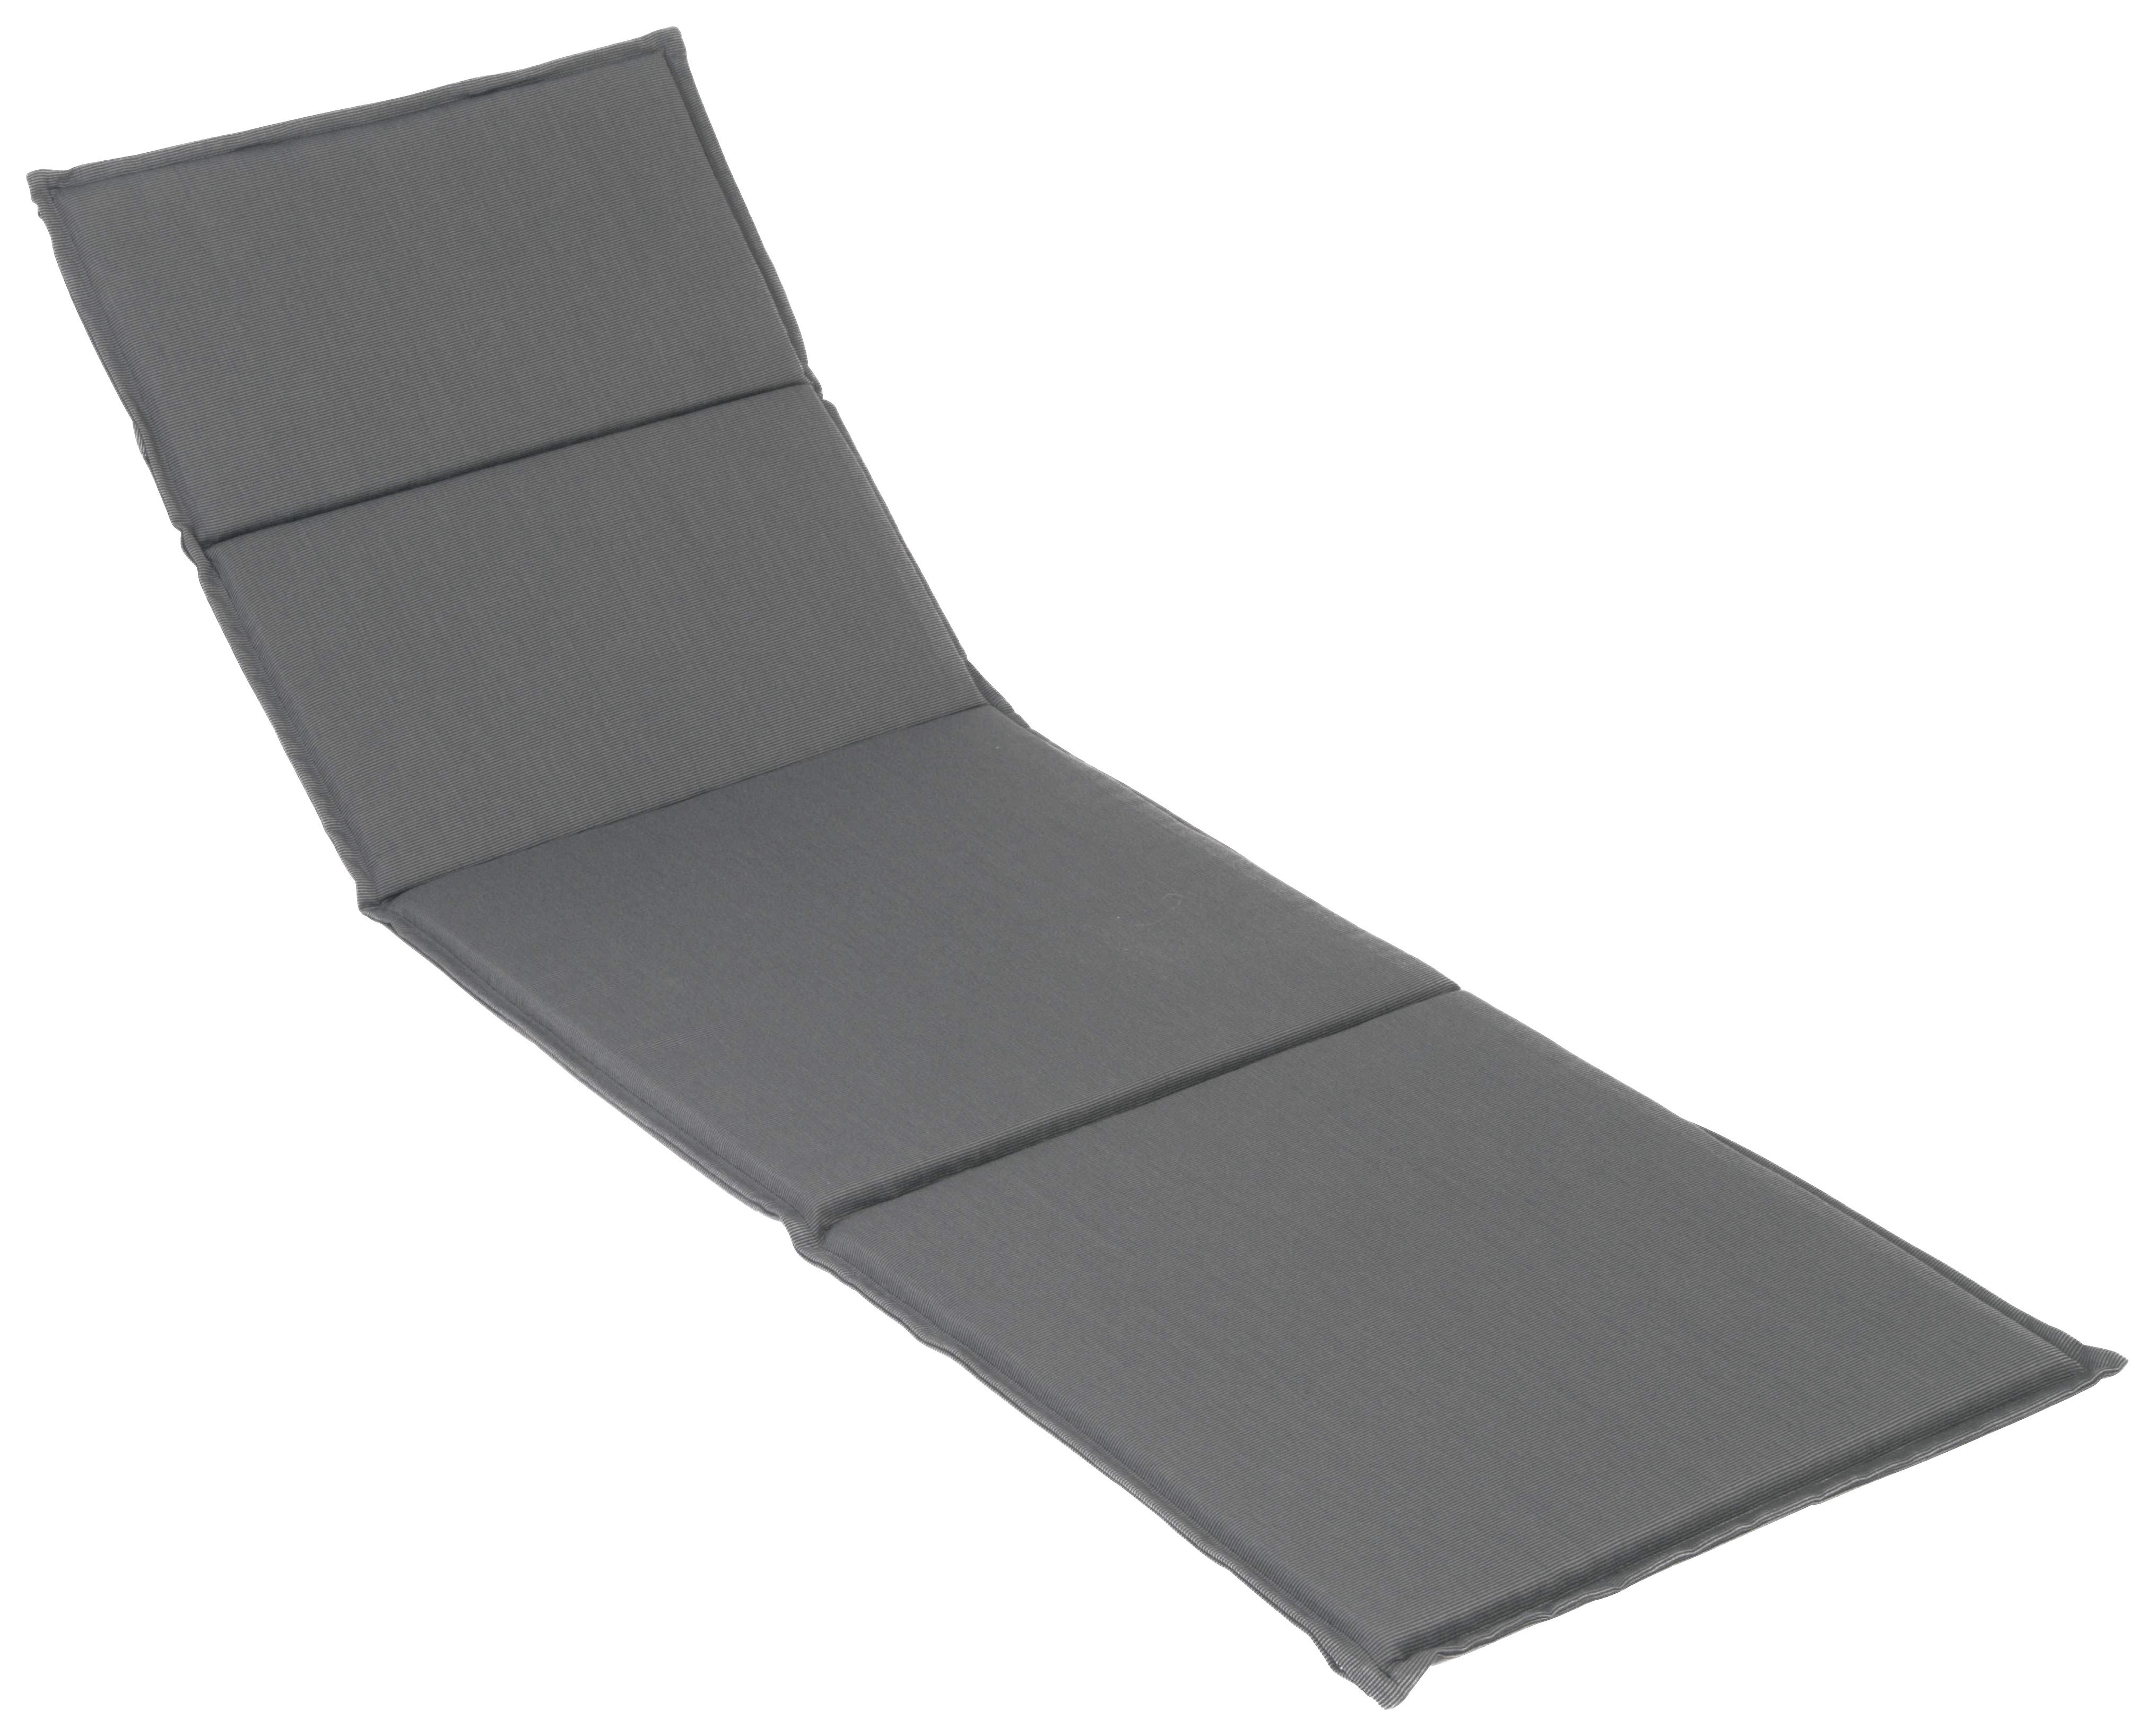 LIEGENAUFLAGE  - Grau, Basics, Textil (74/3/200cm) - Stern